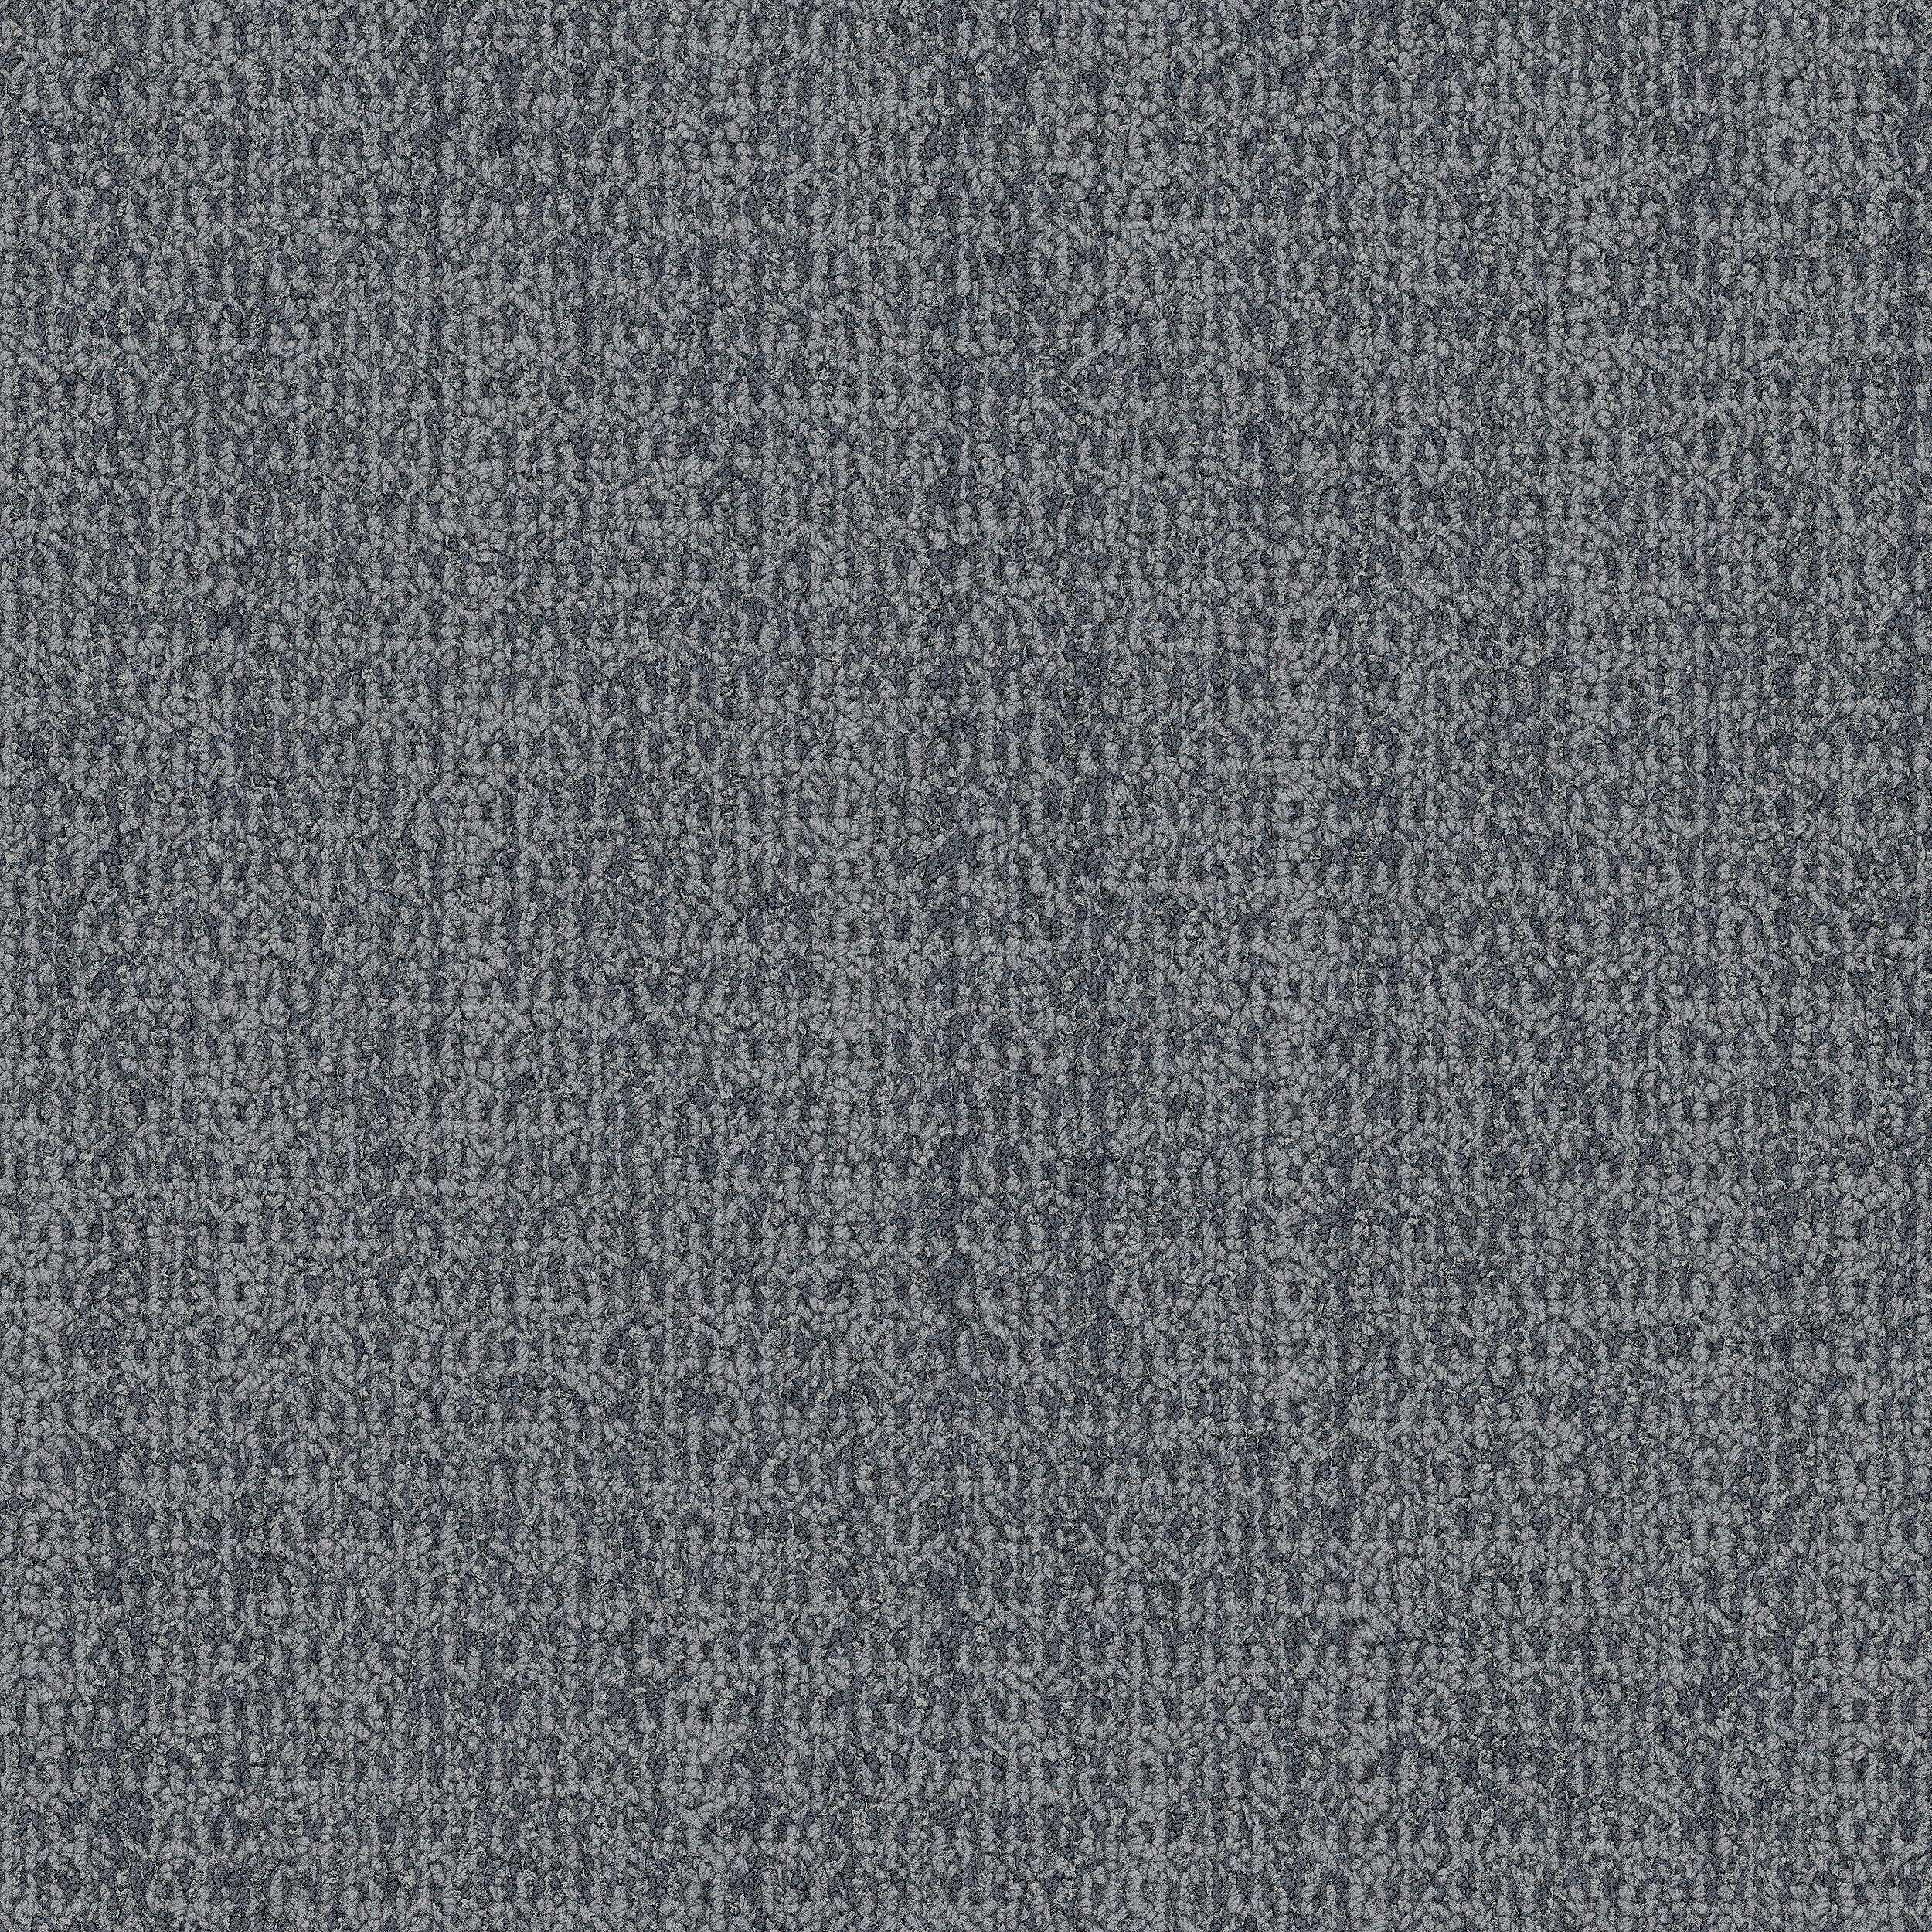 WG100 Carpet Tile In Charcoal afbeeldingnummer 1